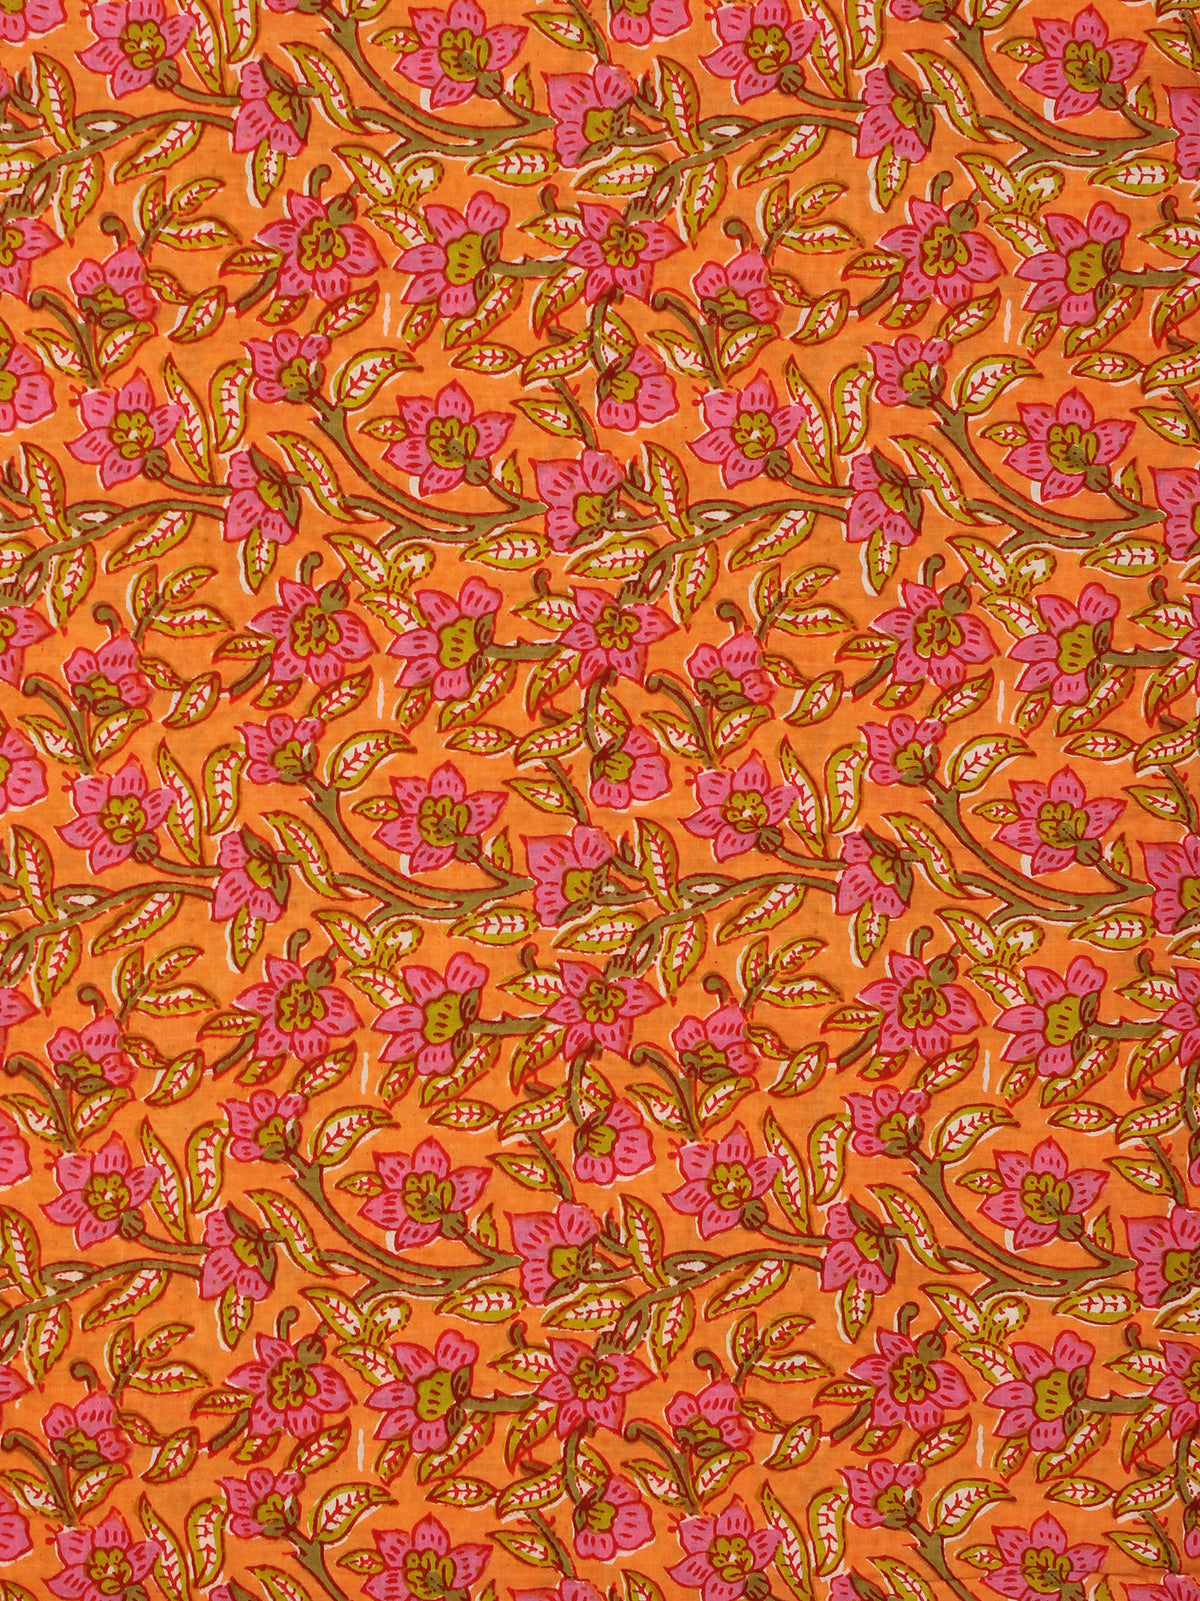 Light Orange Pink Hand Block Printed Cotton Fabric Per Meter - F001F2050